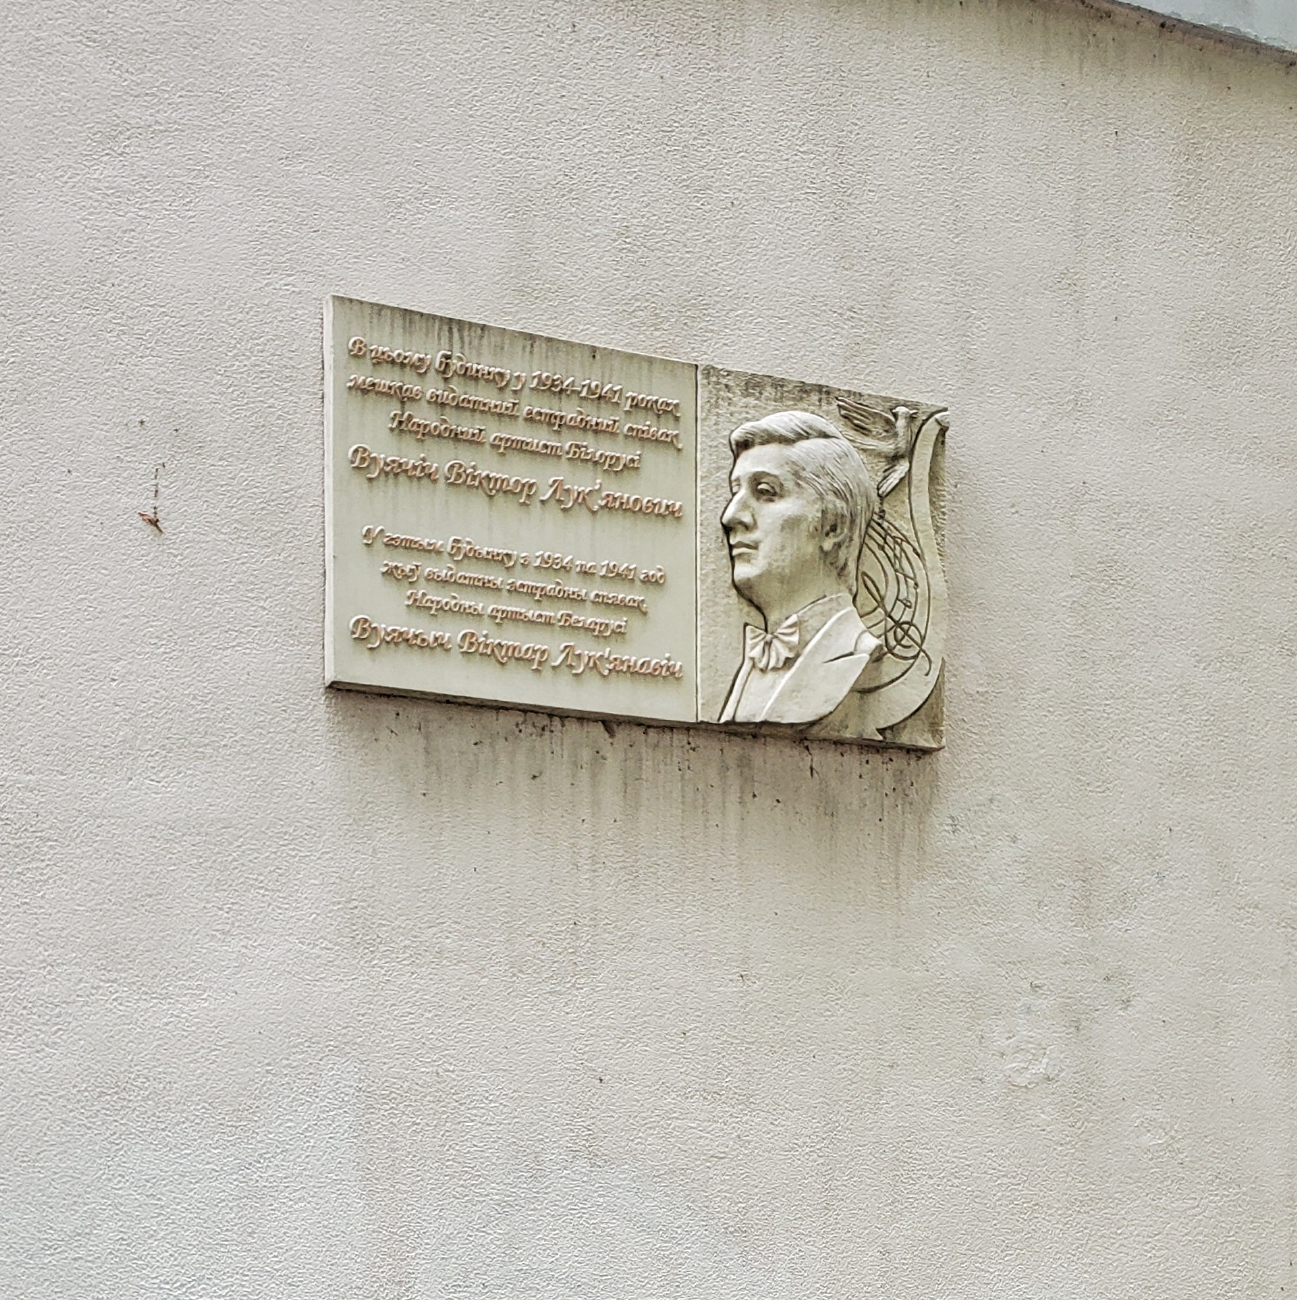 Charkow, Улица Библика, 3. Charkow — Memorial plaques